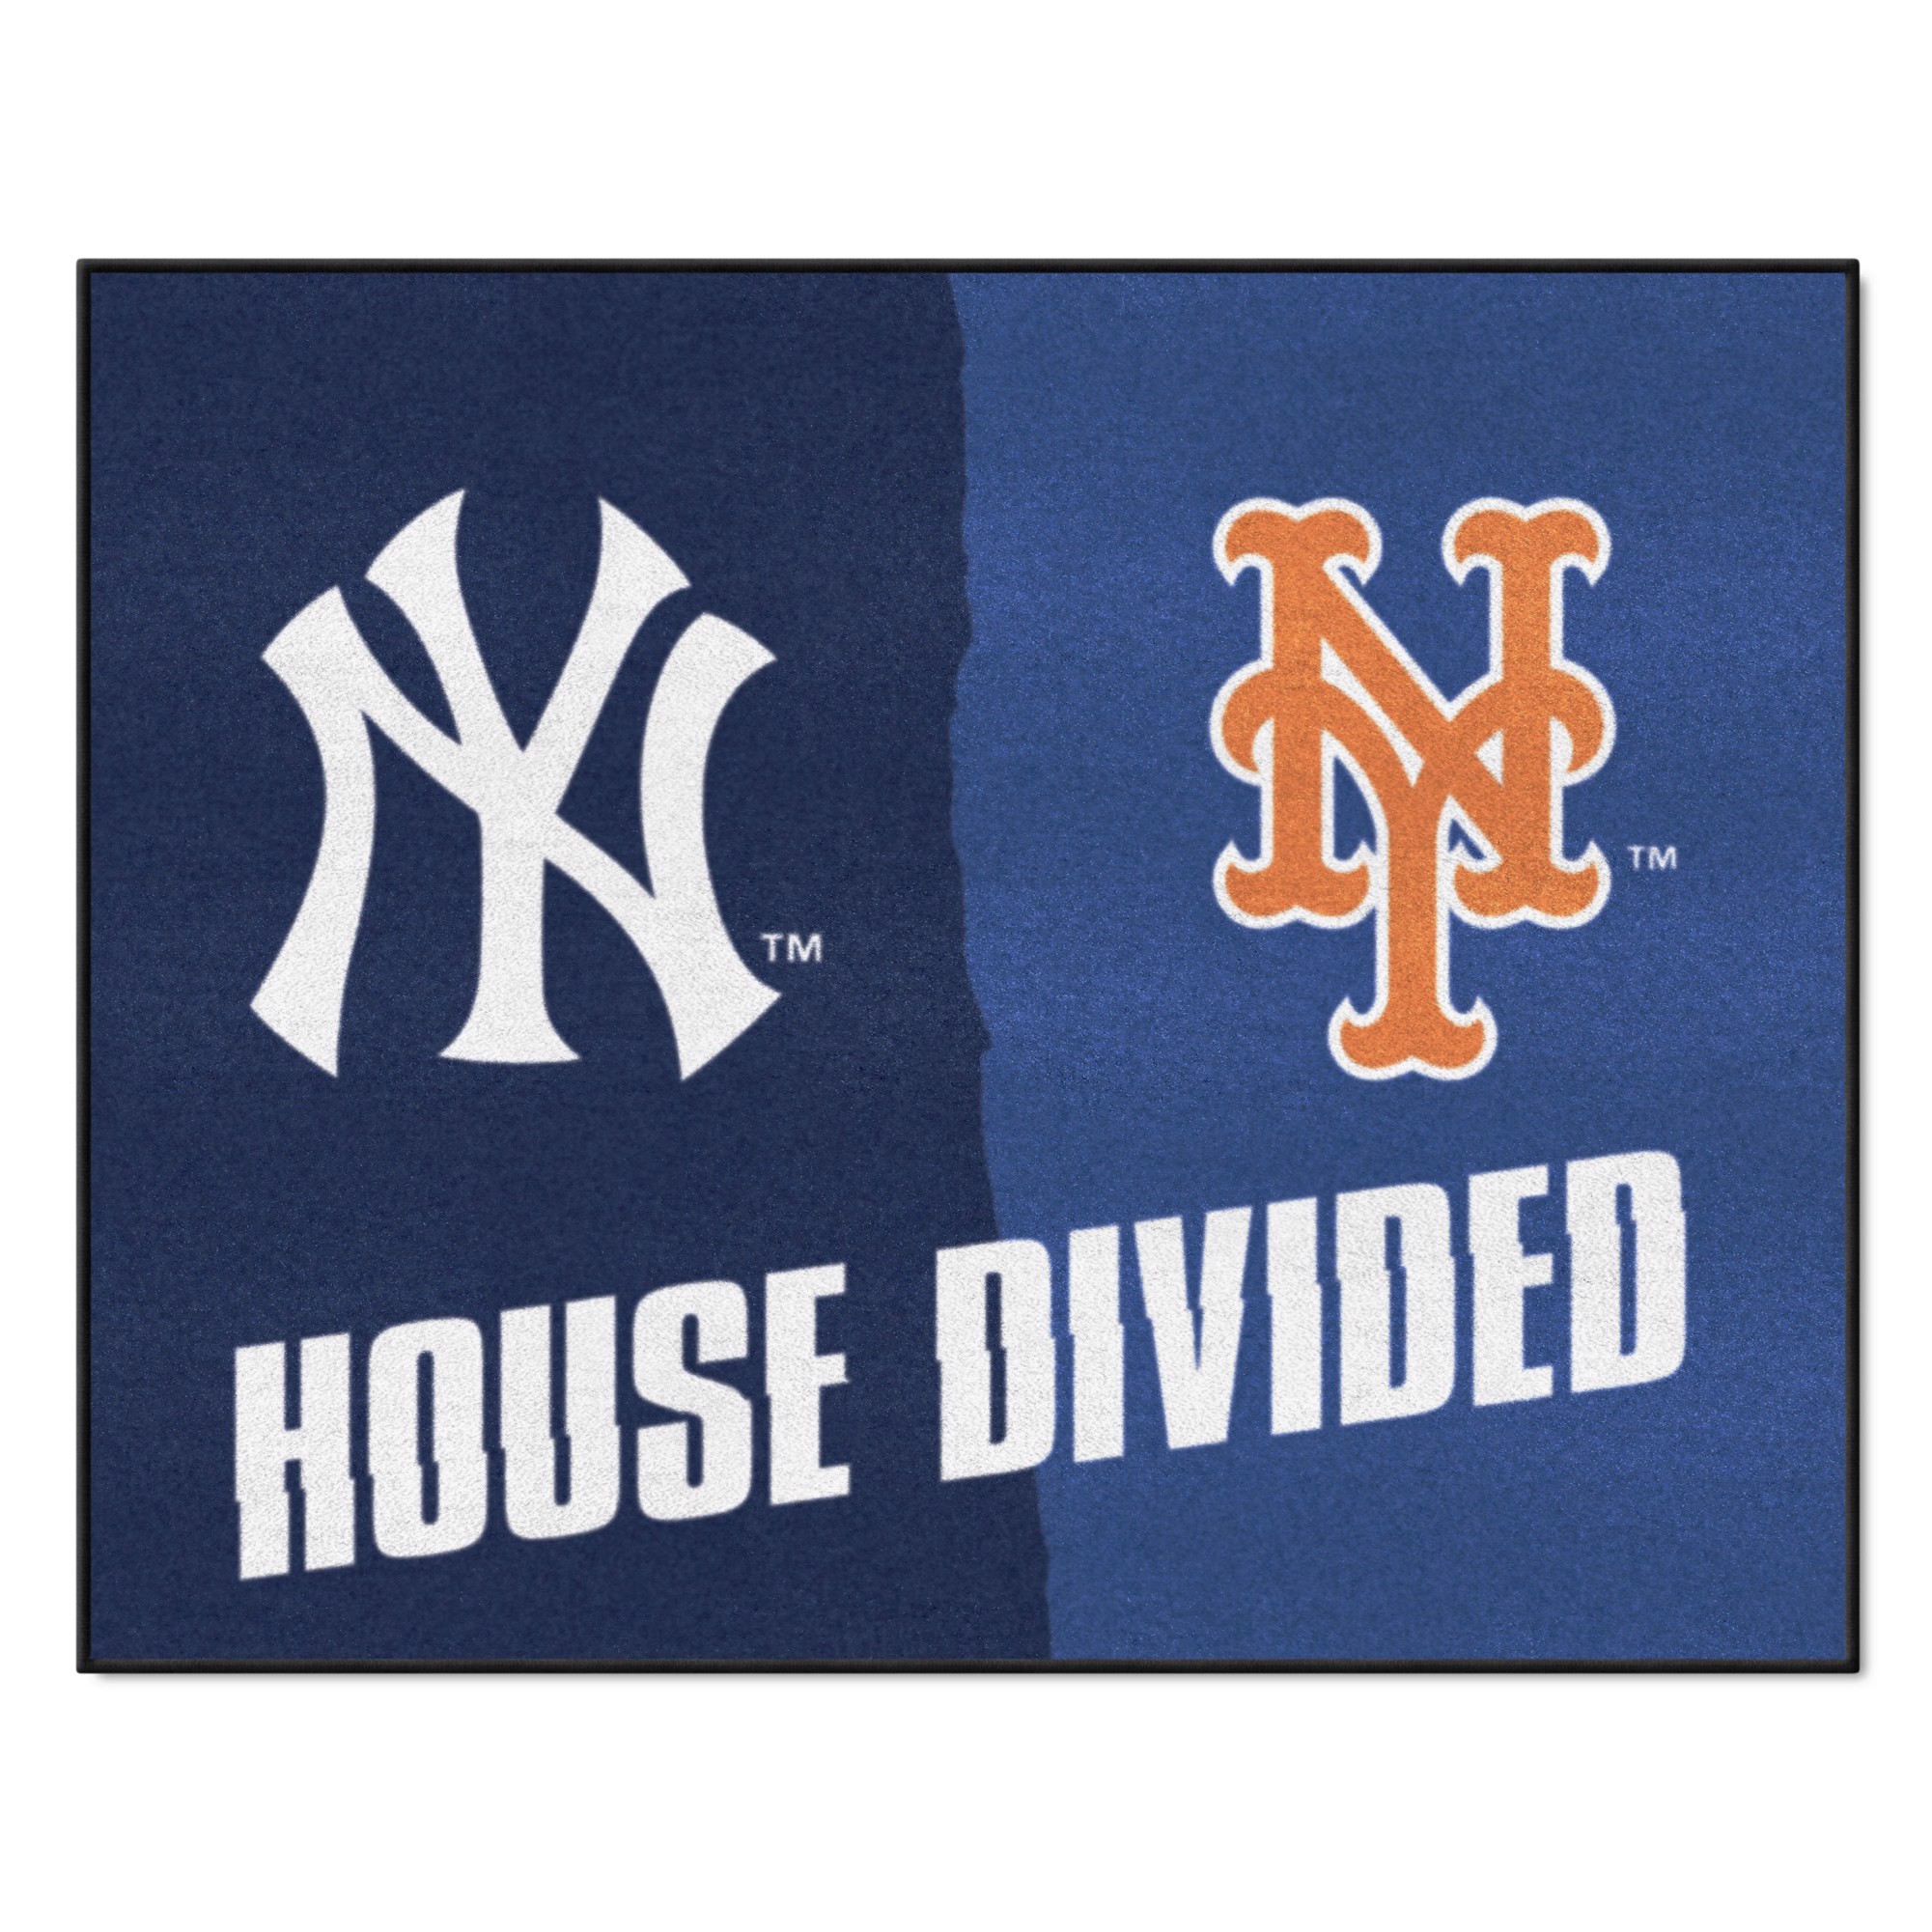 MLB House Divided Mat - Yankees / Mets